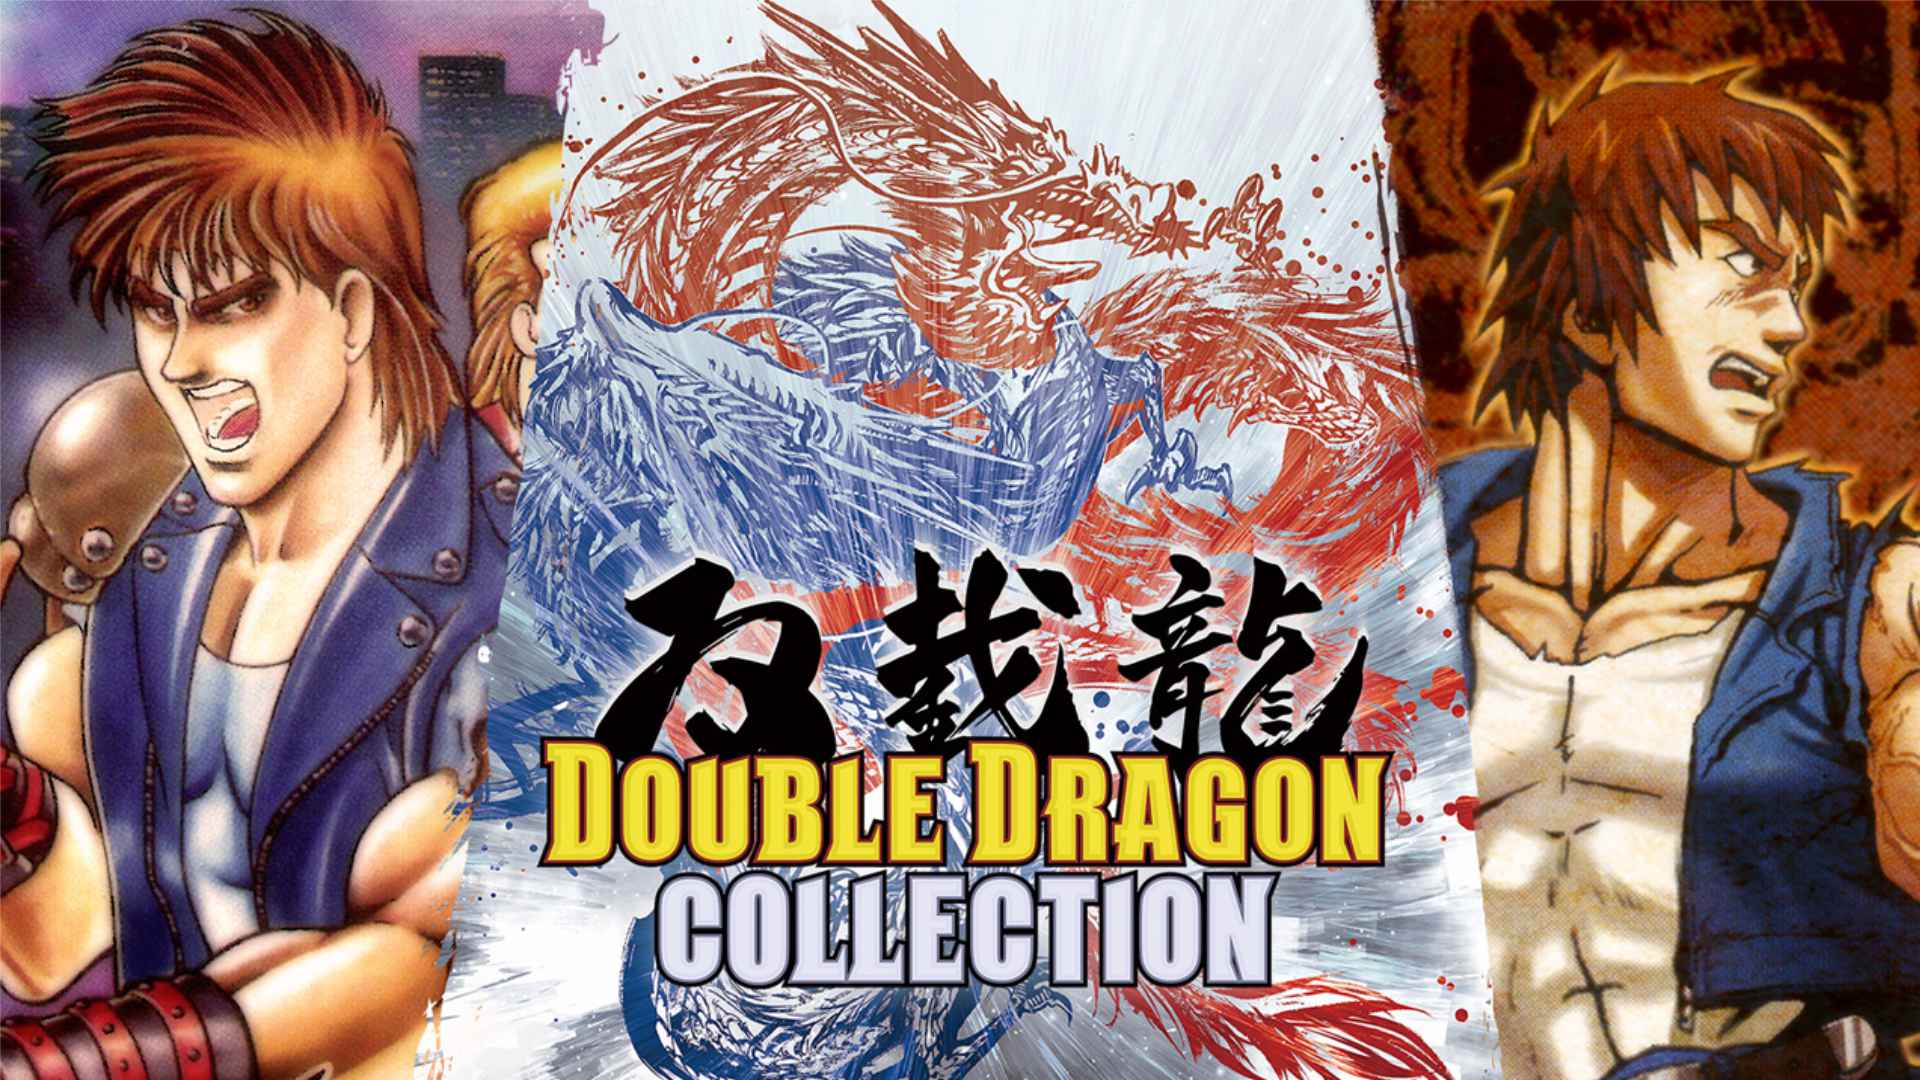 Double Dragon Collection: Erste Details zum Release